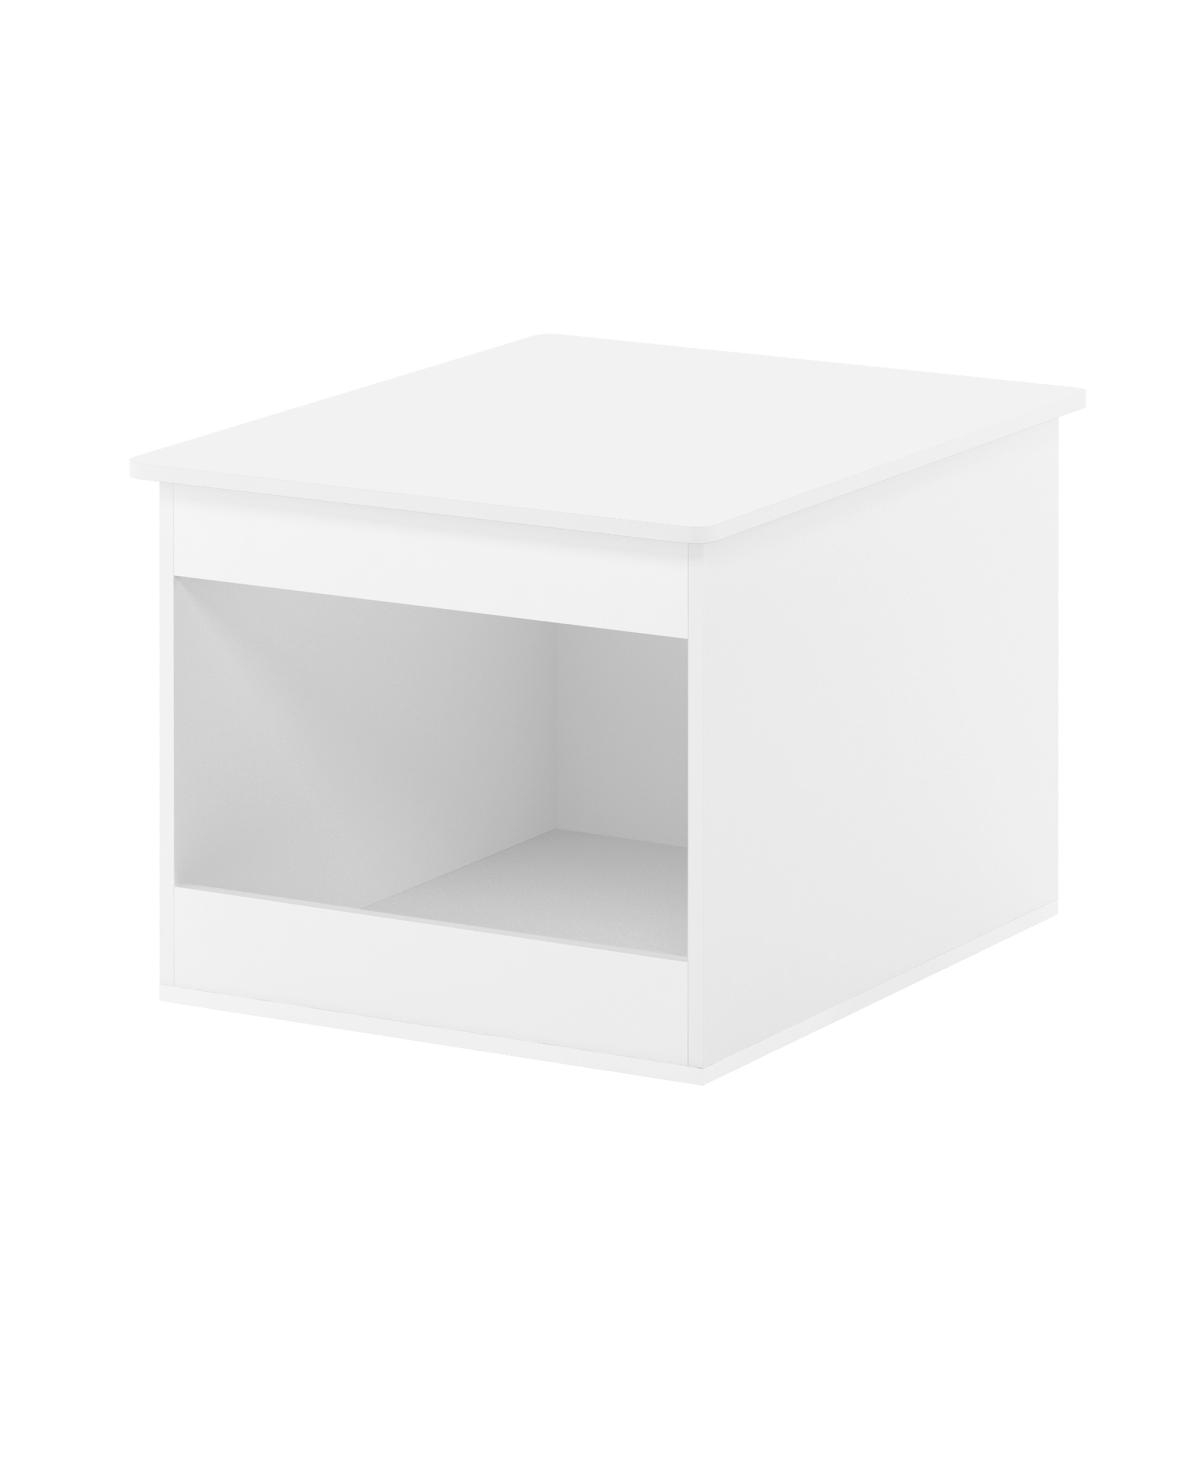 Peli Top Opening Litter Box Enclosure, Solid White - White